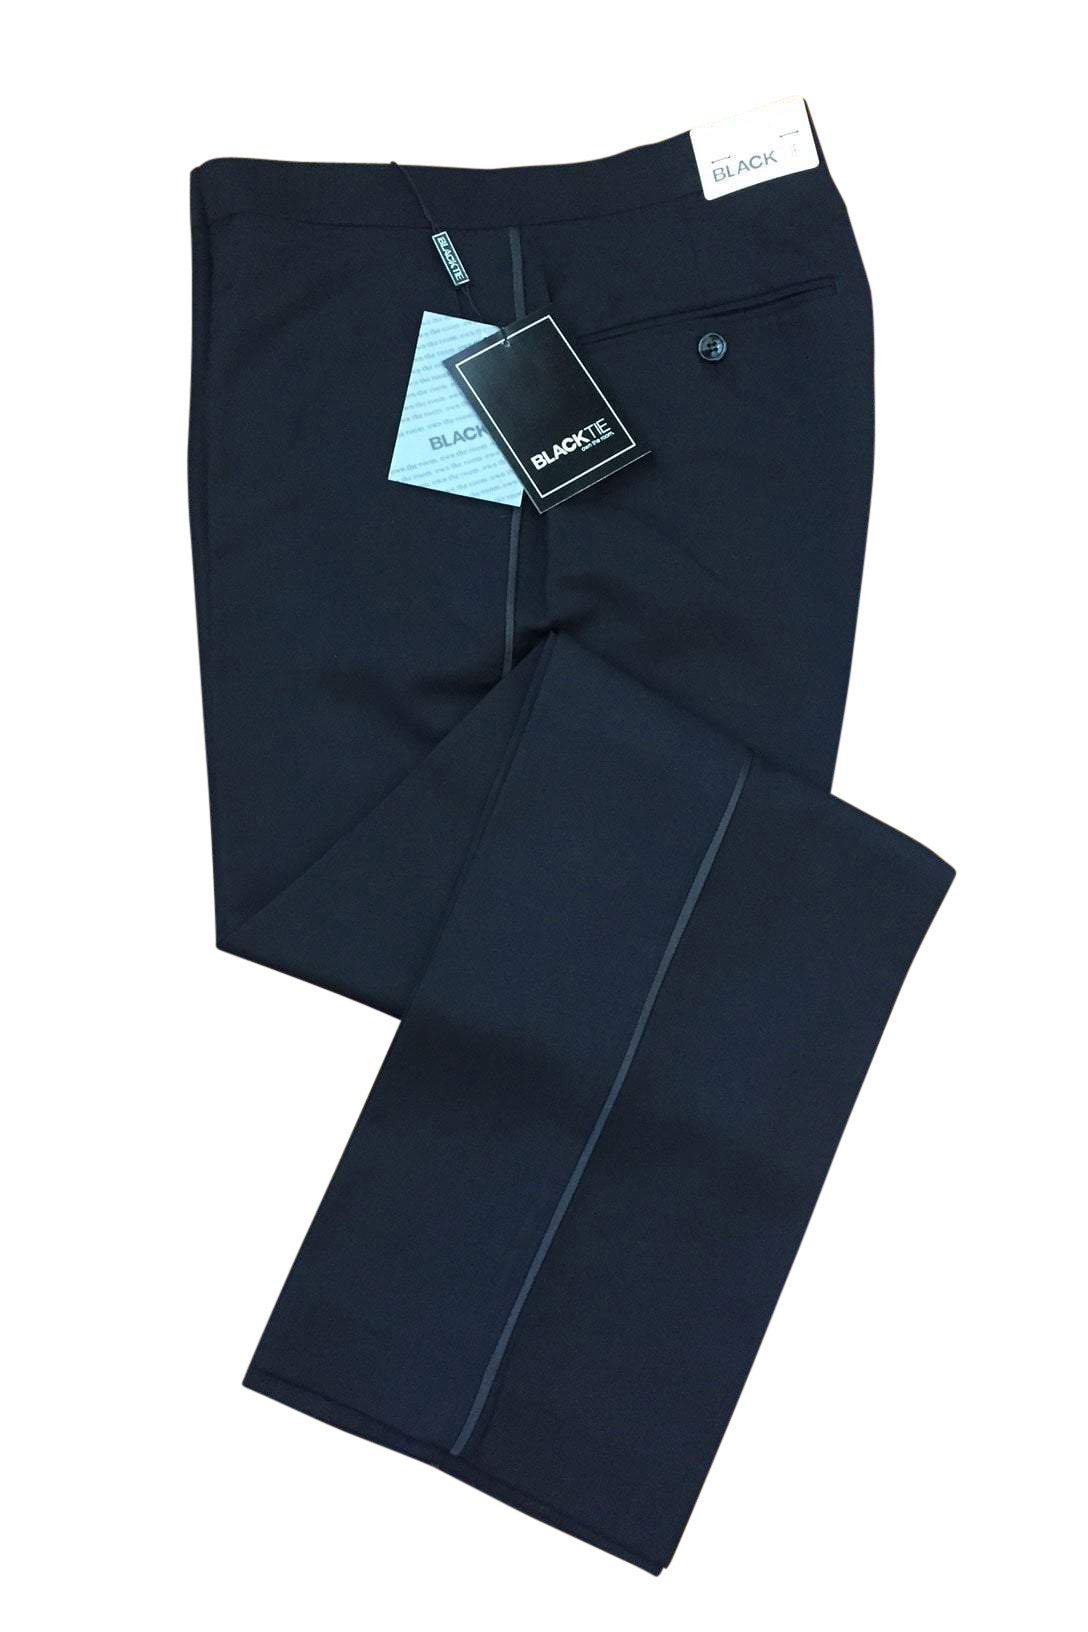 Logan Black Luxury Wool Blend Tuxedo Pants - 28 / 30 / 